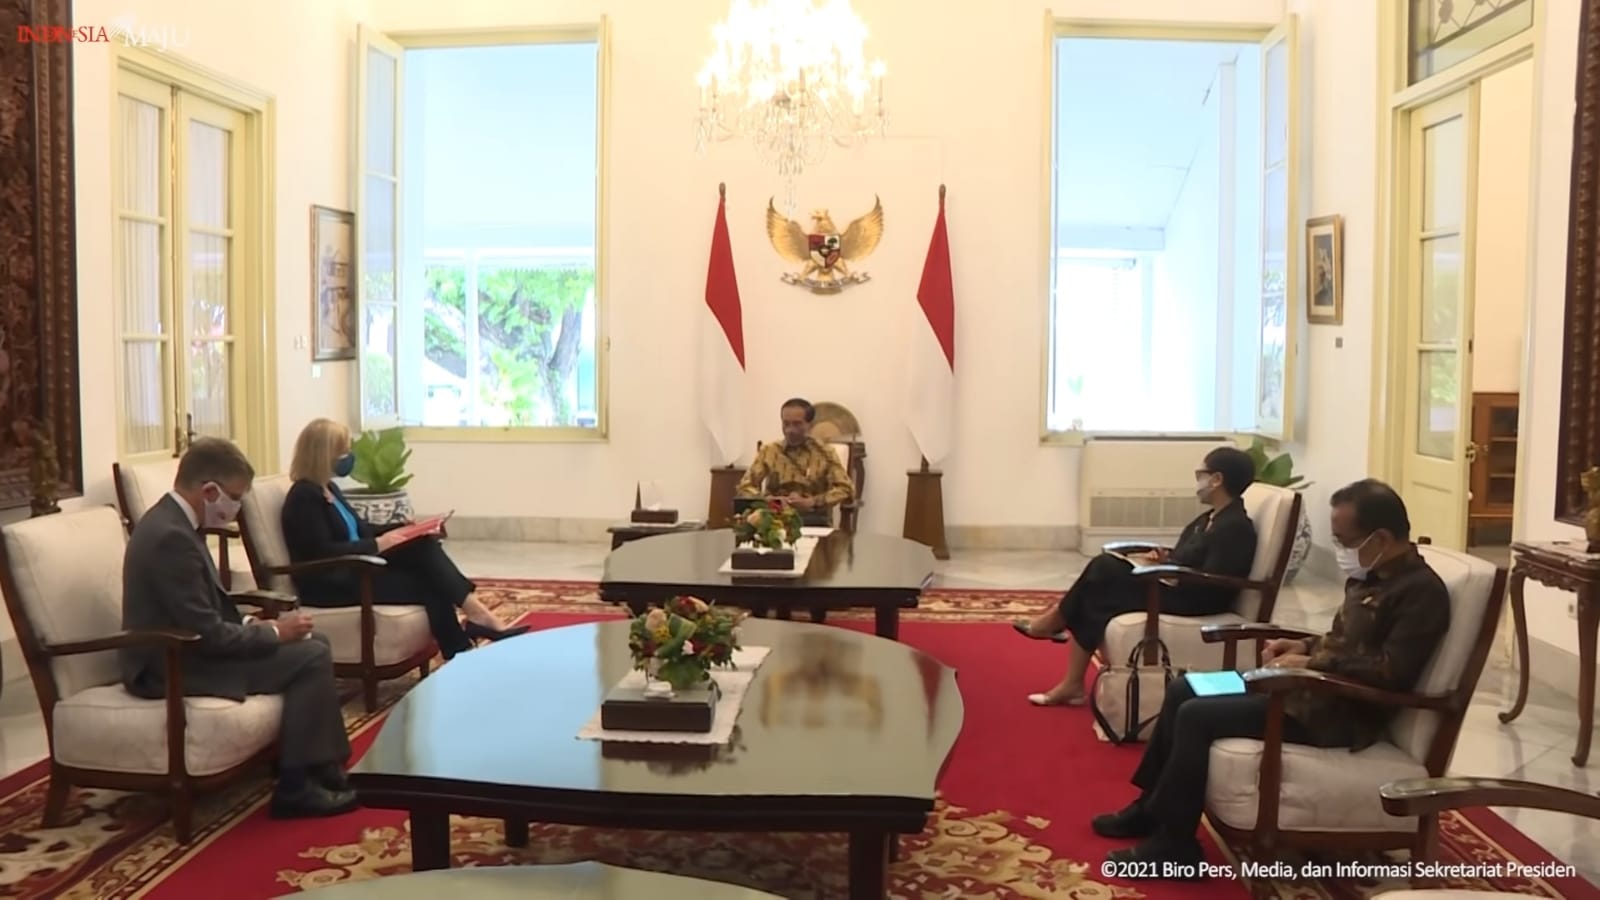 Presiden Jokowi Bahas Tindak Lanjut Kerja Sama Ekonomi Strategis dengan Menlu Inggris.